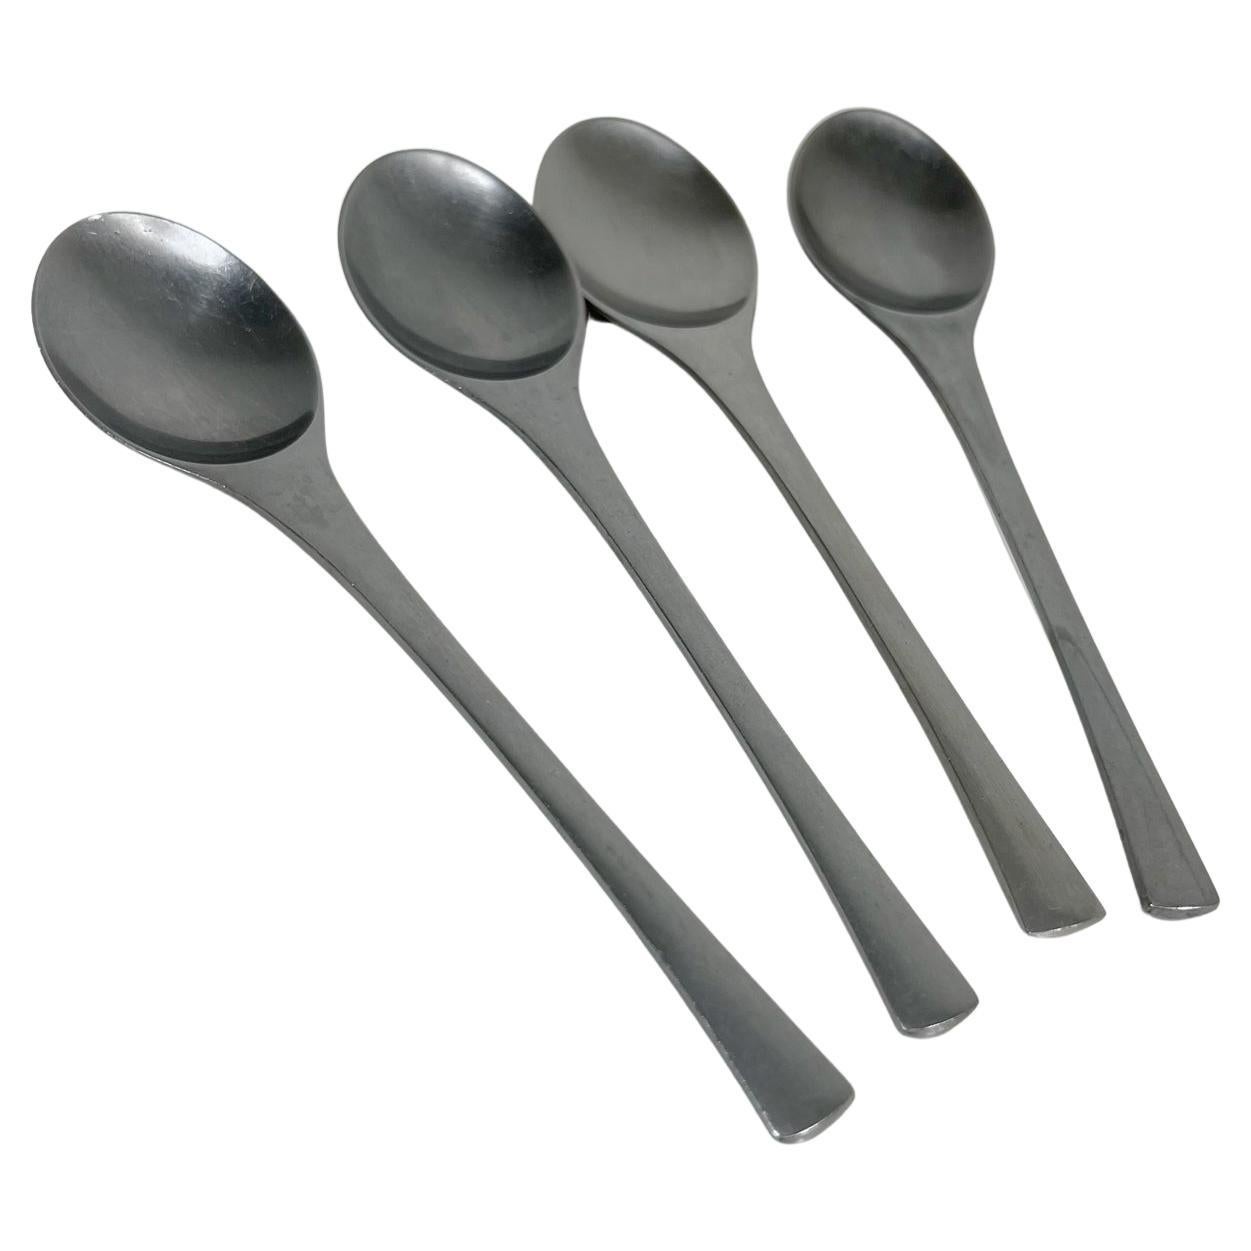 1950s Modern Dansk Set of Four Spoons Odin IHQ Jens Quistgaard Germany